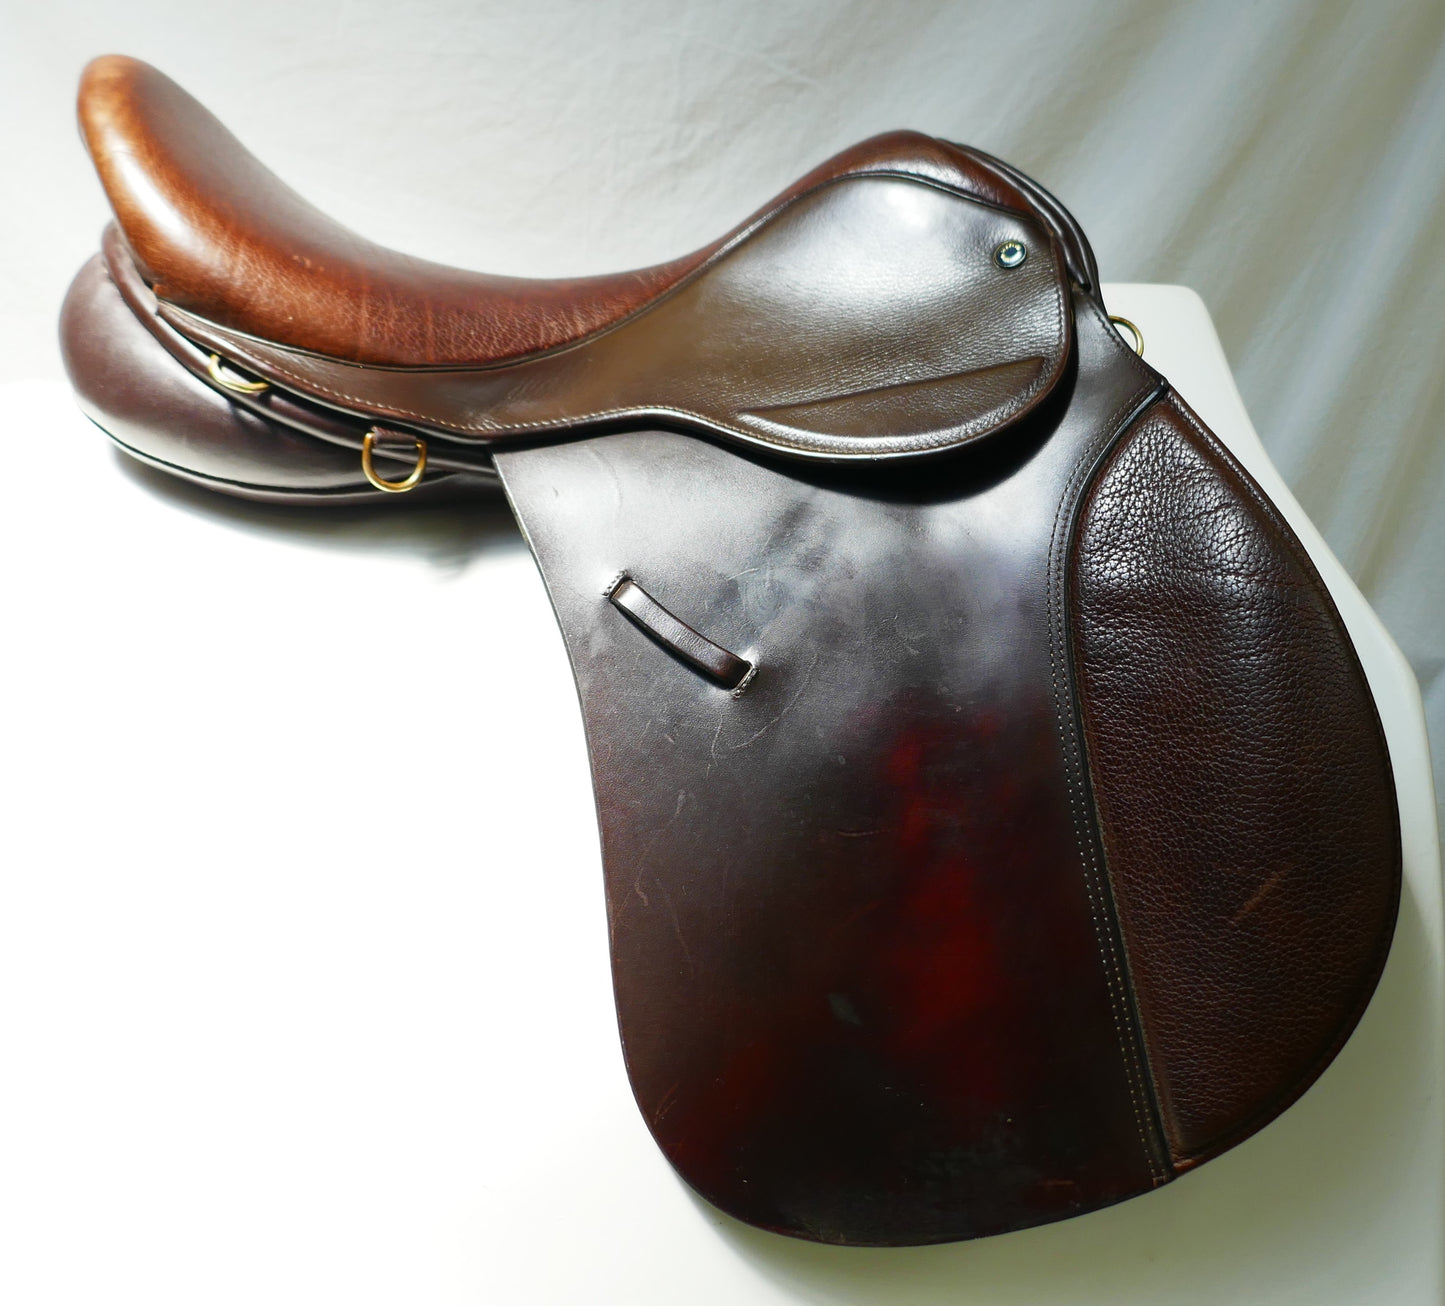 Ideal (Martin Wilkinson) VSD Saddle - 17.5" Medium Brown B4384